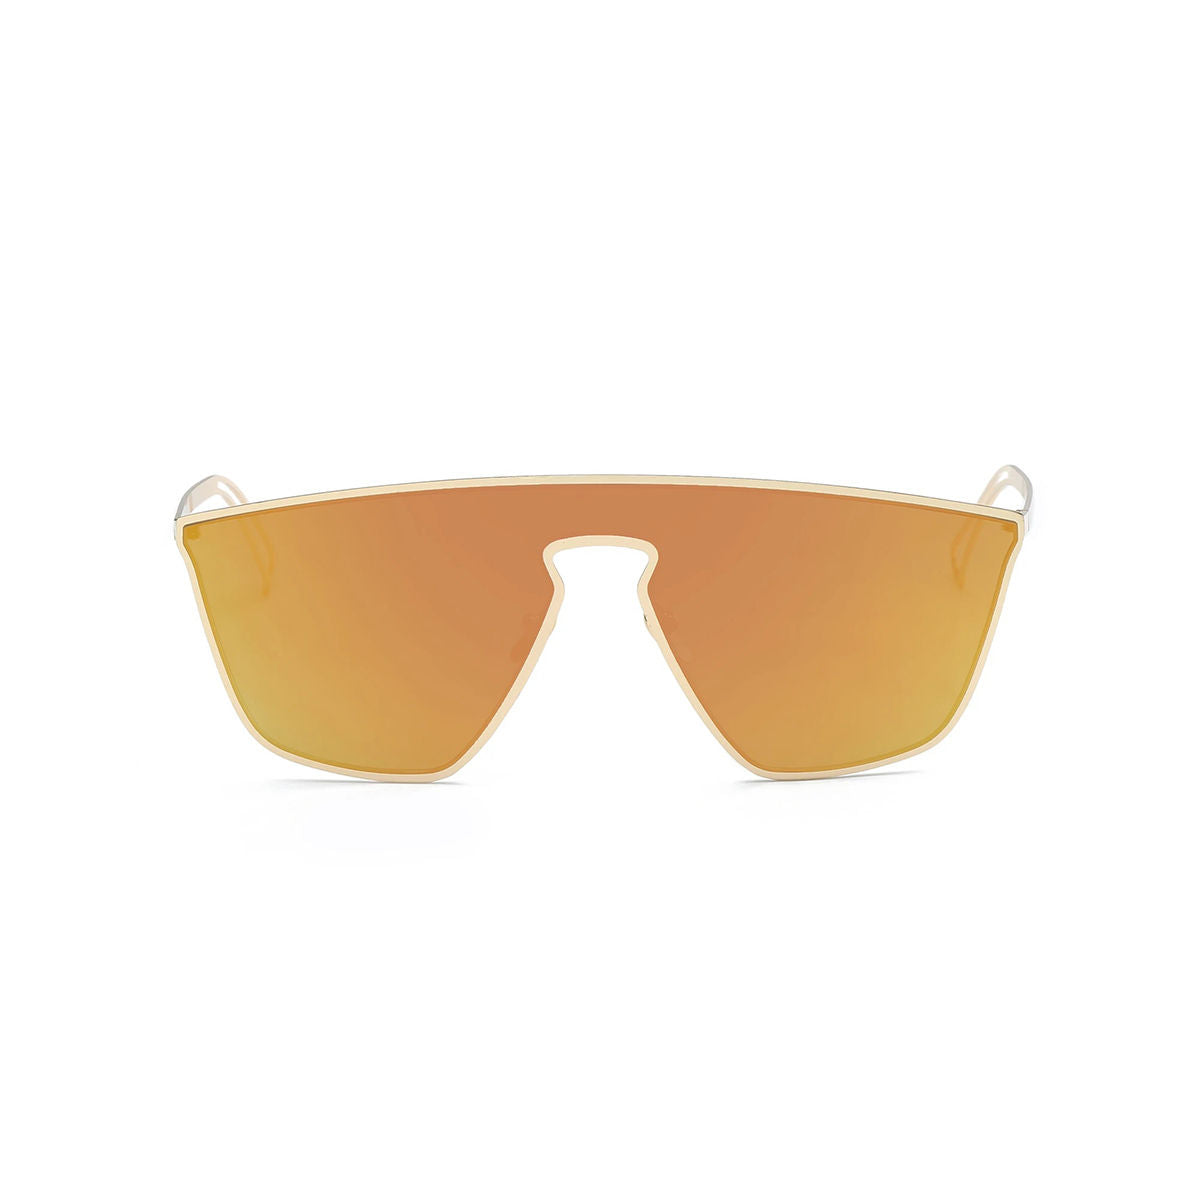 Sunburst Orange Sunglasses at Fancy5Fashion.com